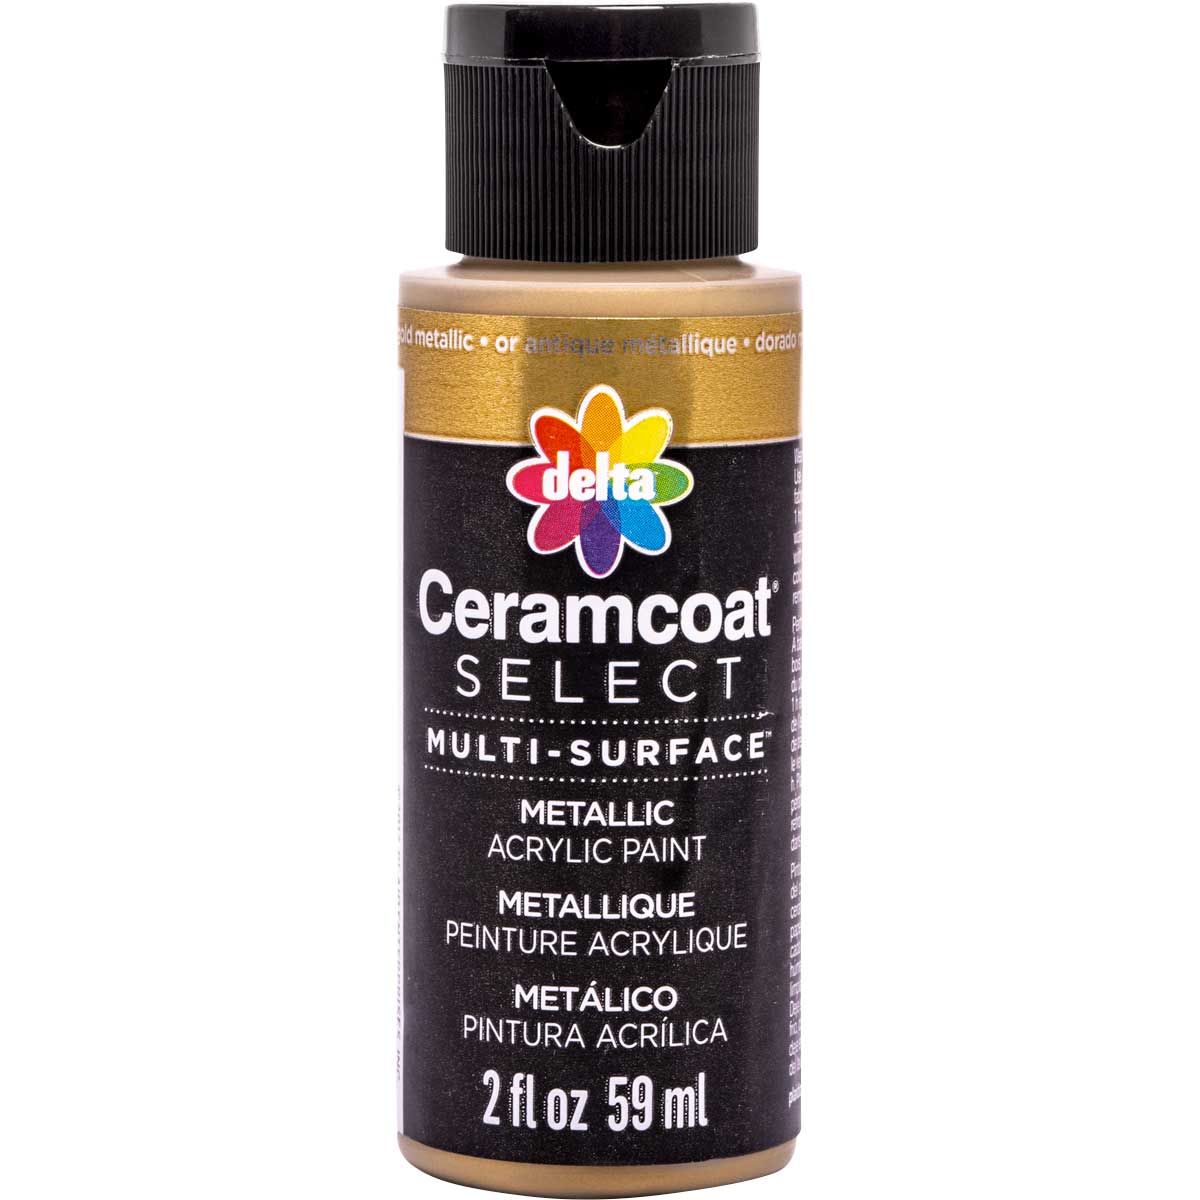 Delta Ceramcoat ® Select Multi-Surface Acrylic Paint - Metallic - Antique Gold, 2 oz. - 04110